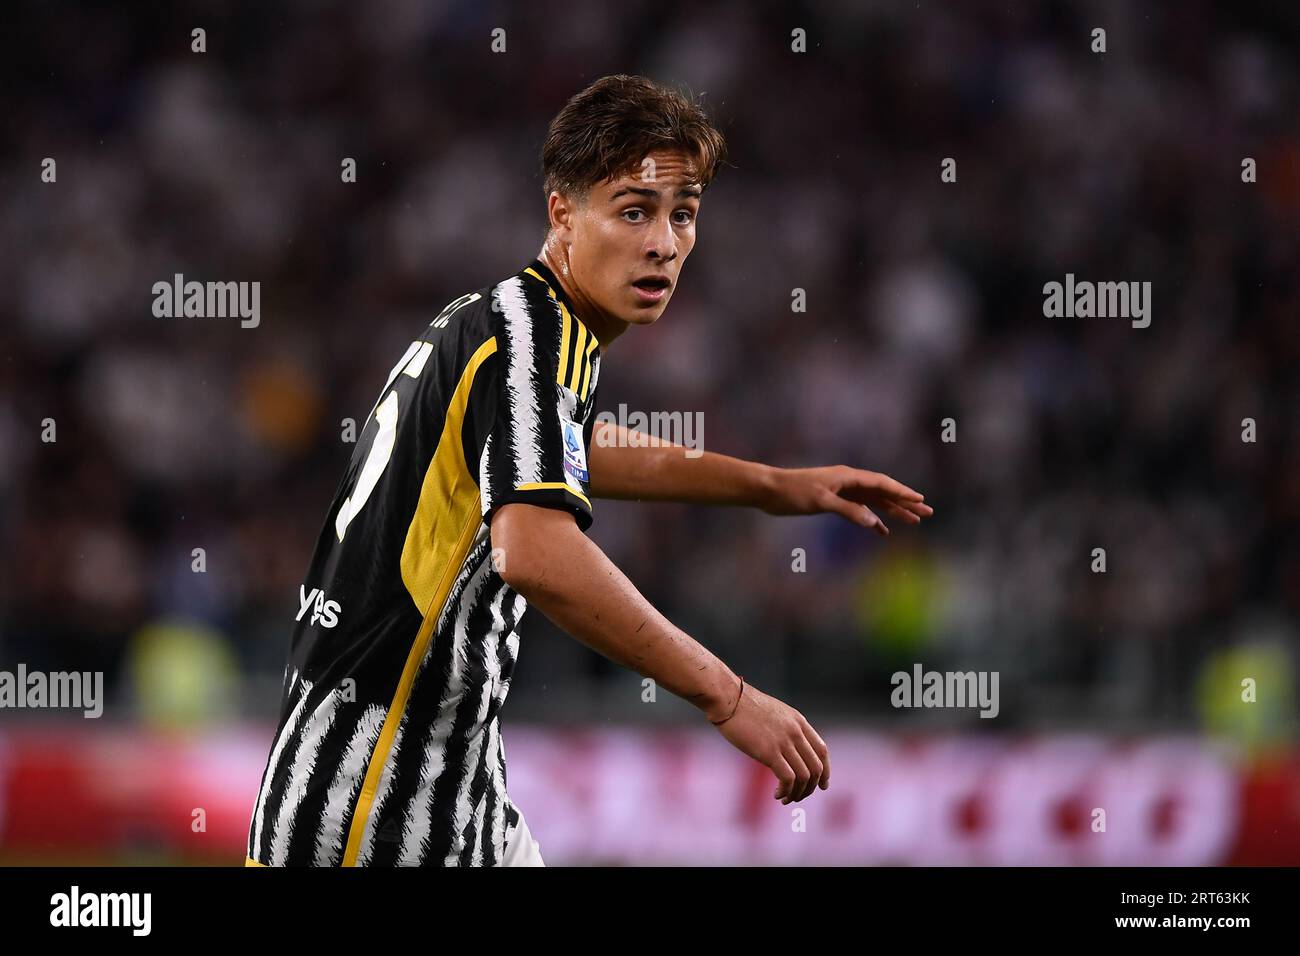 Kenan Yildiz of Juventus Next Gen celebrate after scoring a goal News  Photo - Getty Images